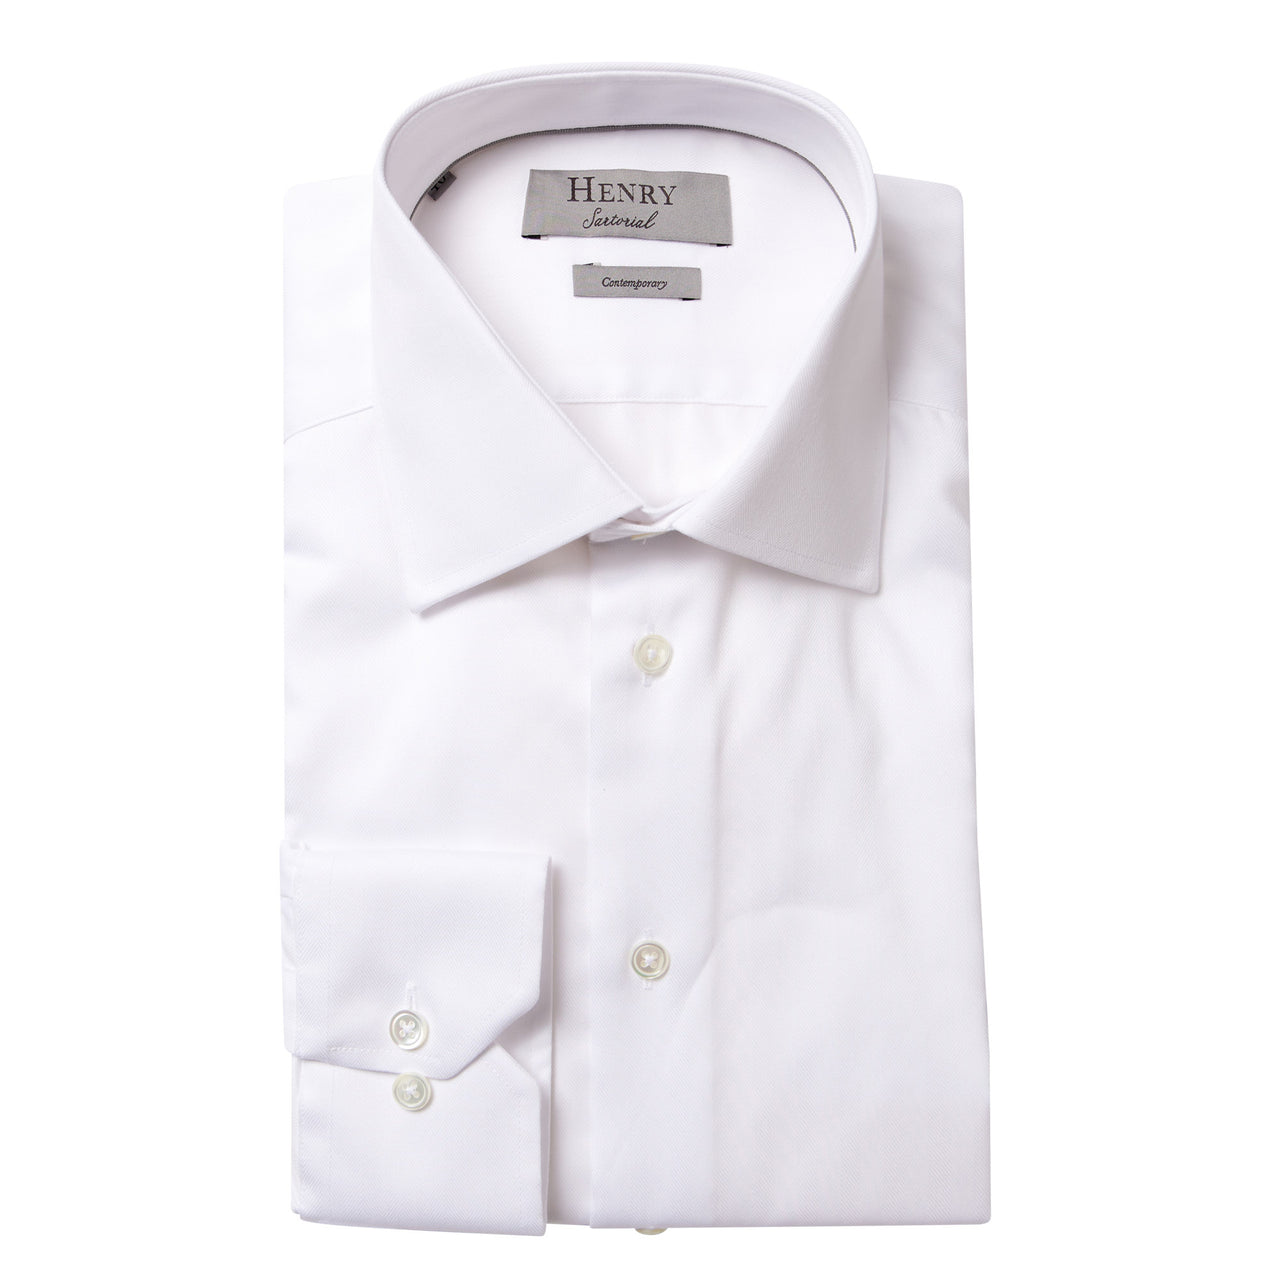 HENRY SARTORIAL Herringbone Business Shirt Single Cuff Contemporary Fit WHITE